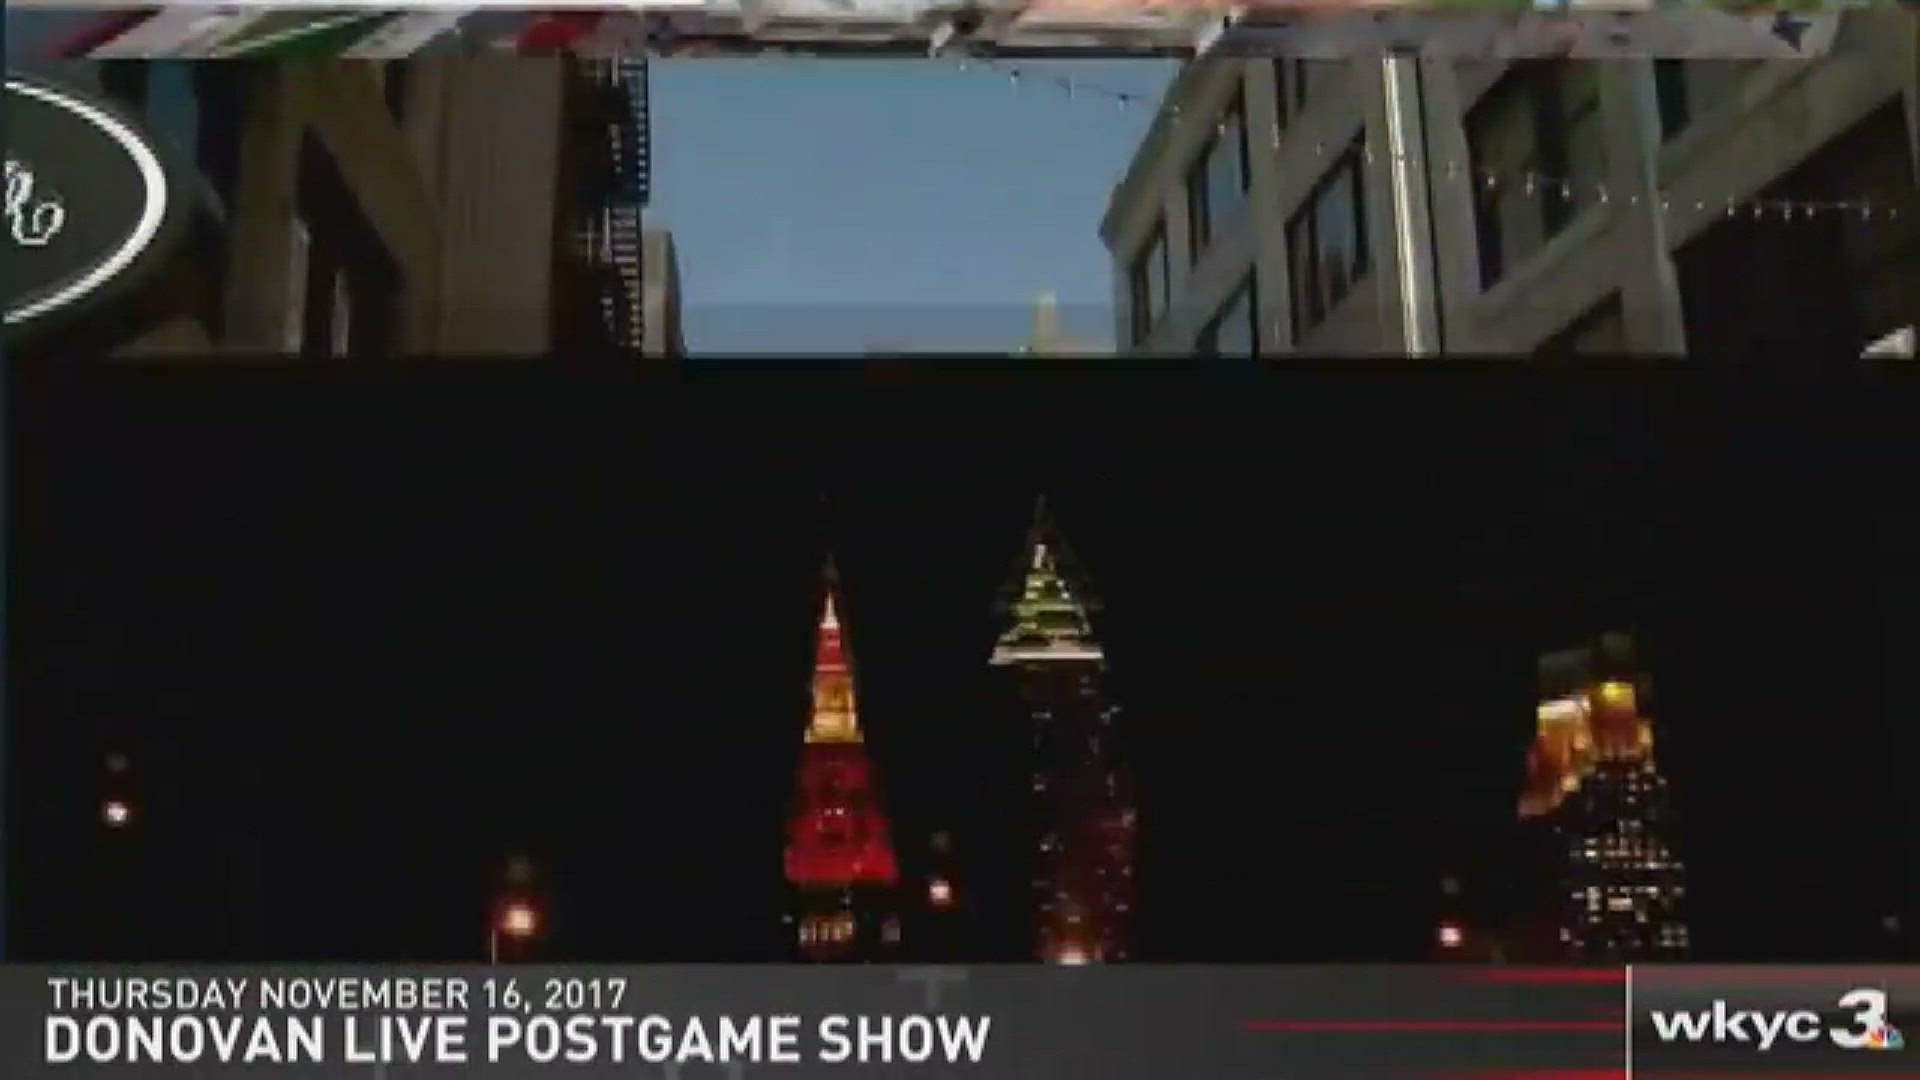 Revisiting 'Bottlegate': The Donovan Live Postgame Show